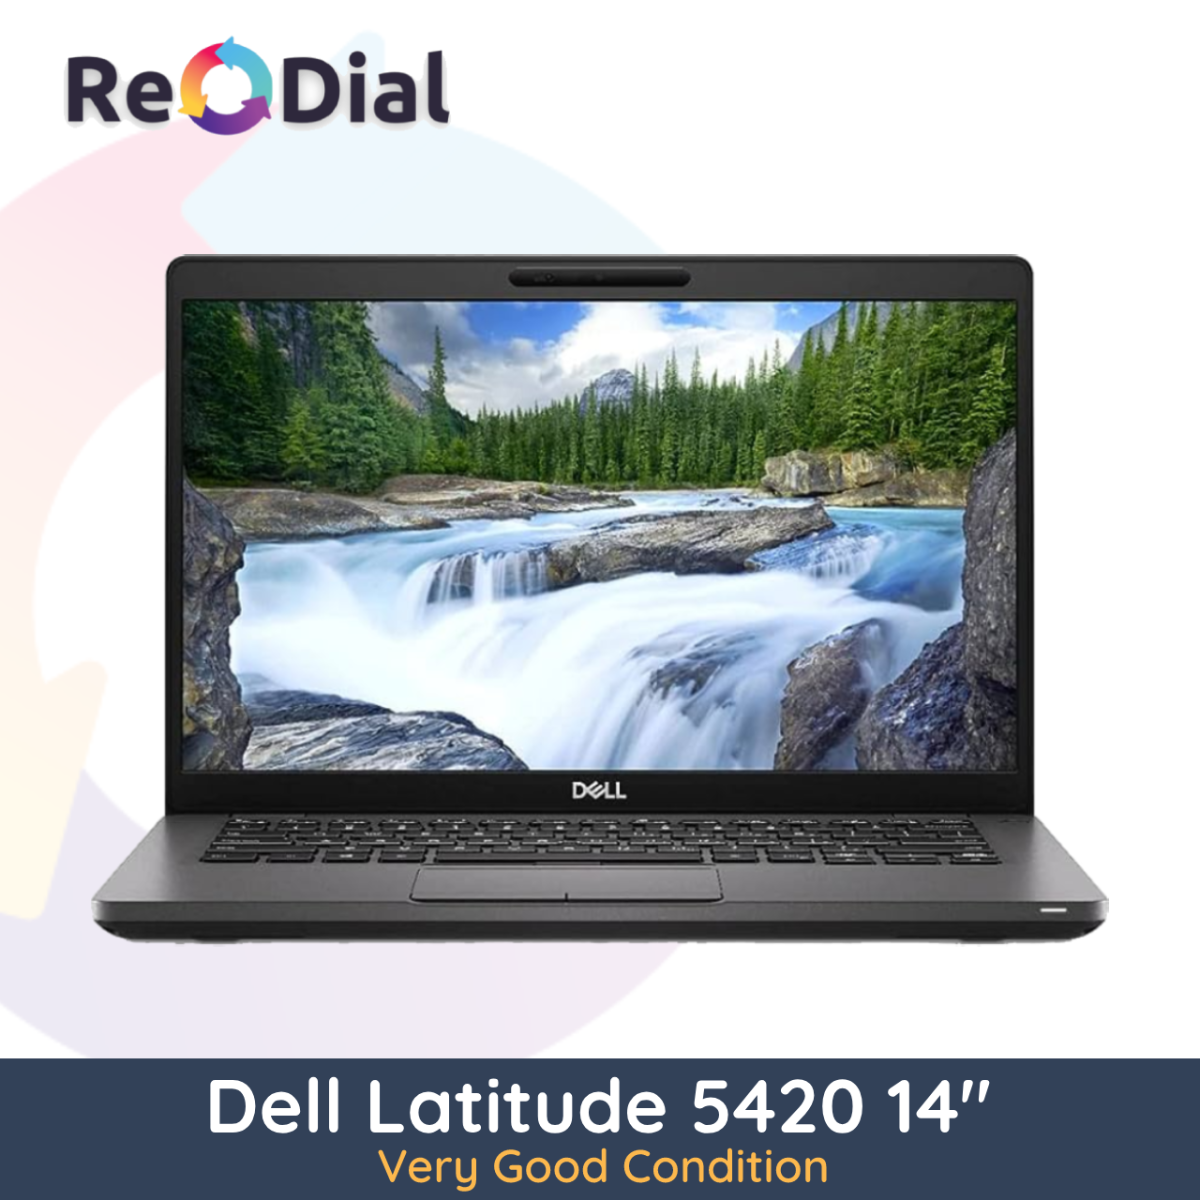 Dell Latitude 5420 14" Laptop i7-1165G7 256Gb 8Gb/16Gb RAM - Very Good Condition